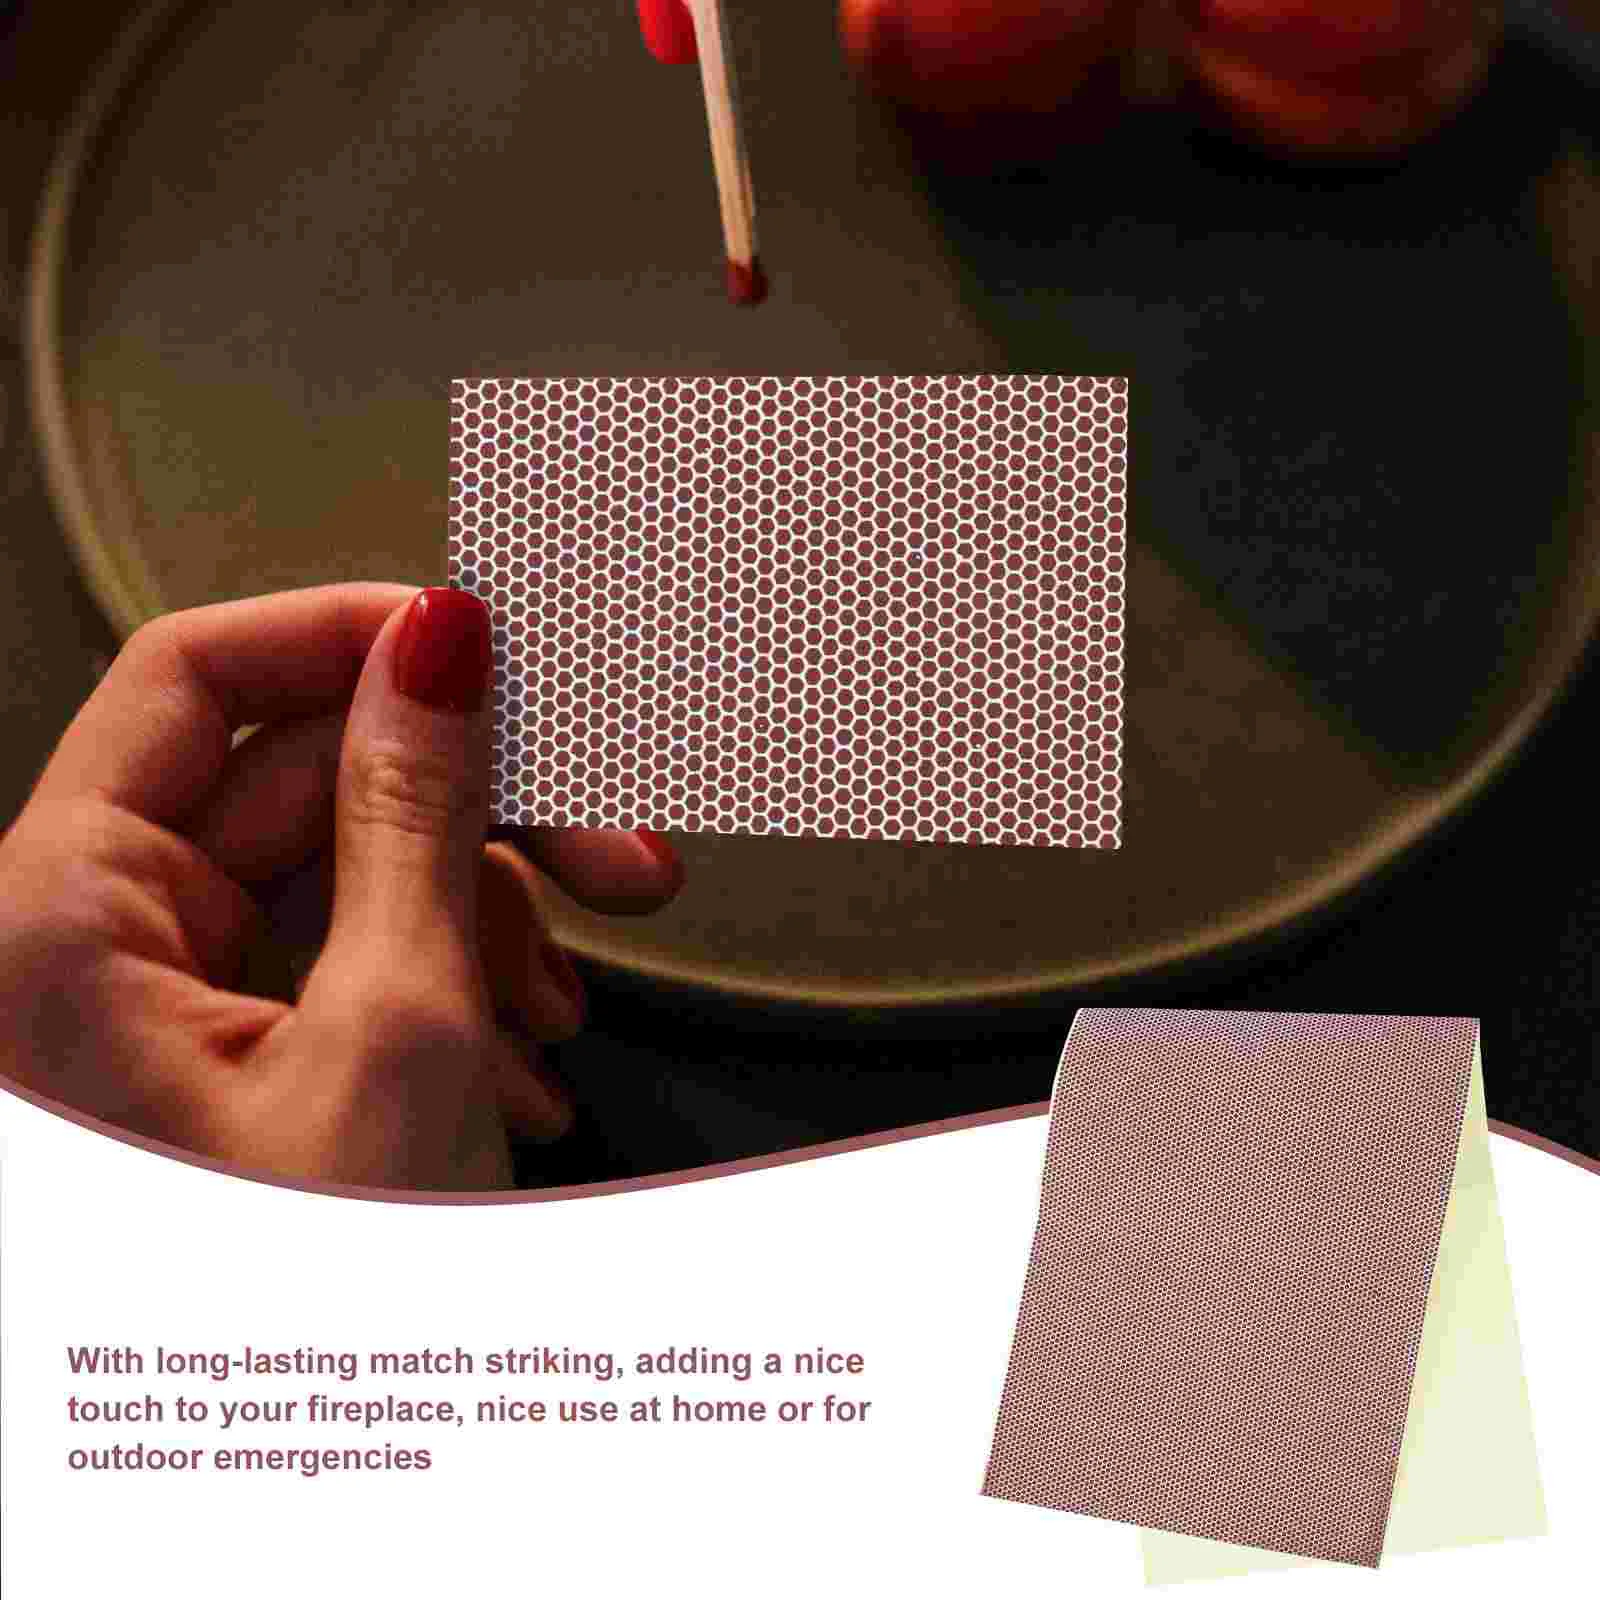 Match Phosphorus Tablets Bulk Candles Striker Paper Supplies Permanent Red Adhesive Stick Matches